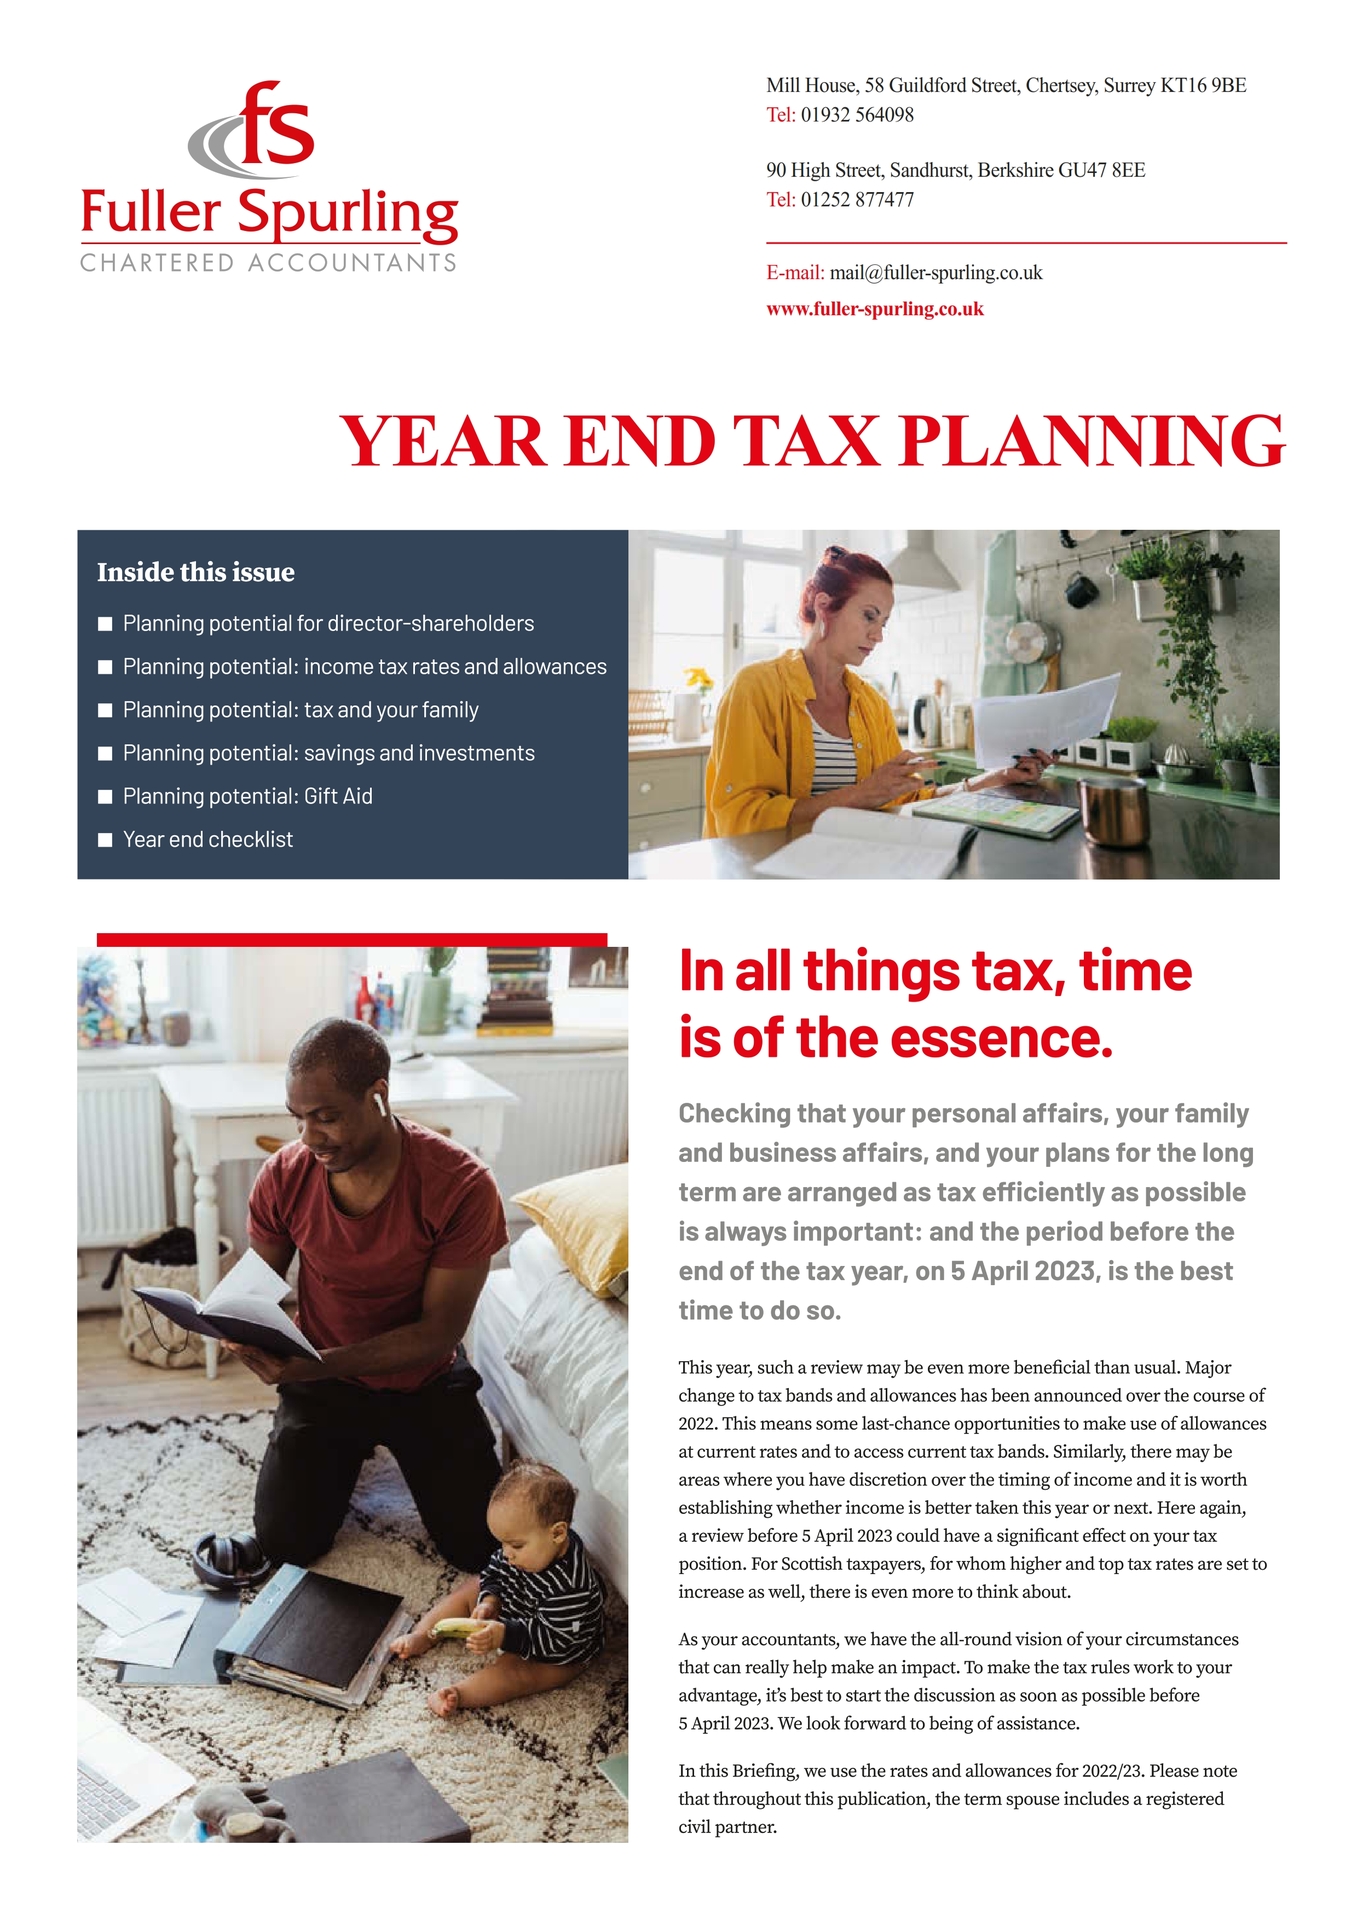 Winter 2022 Tax Briefing